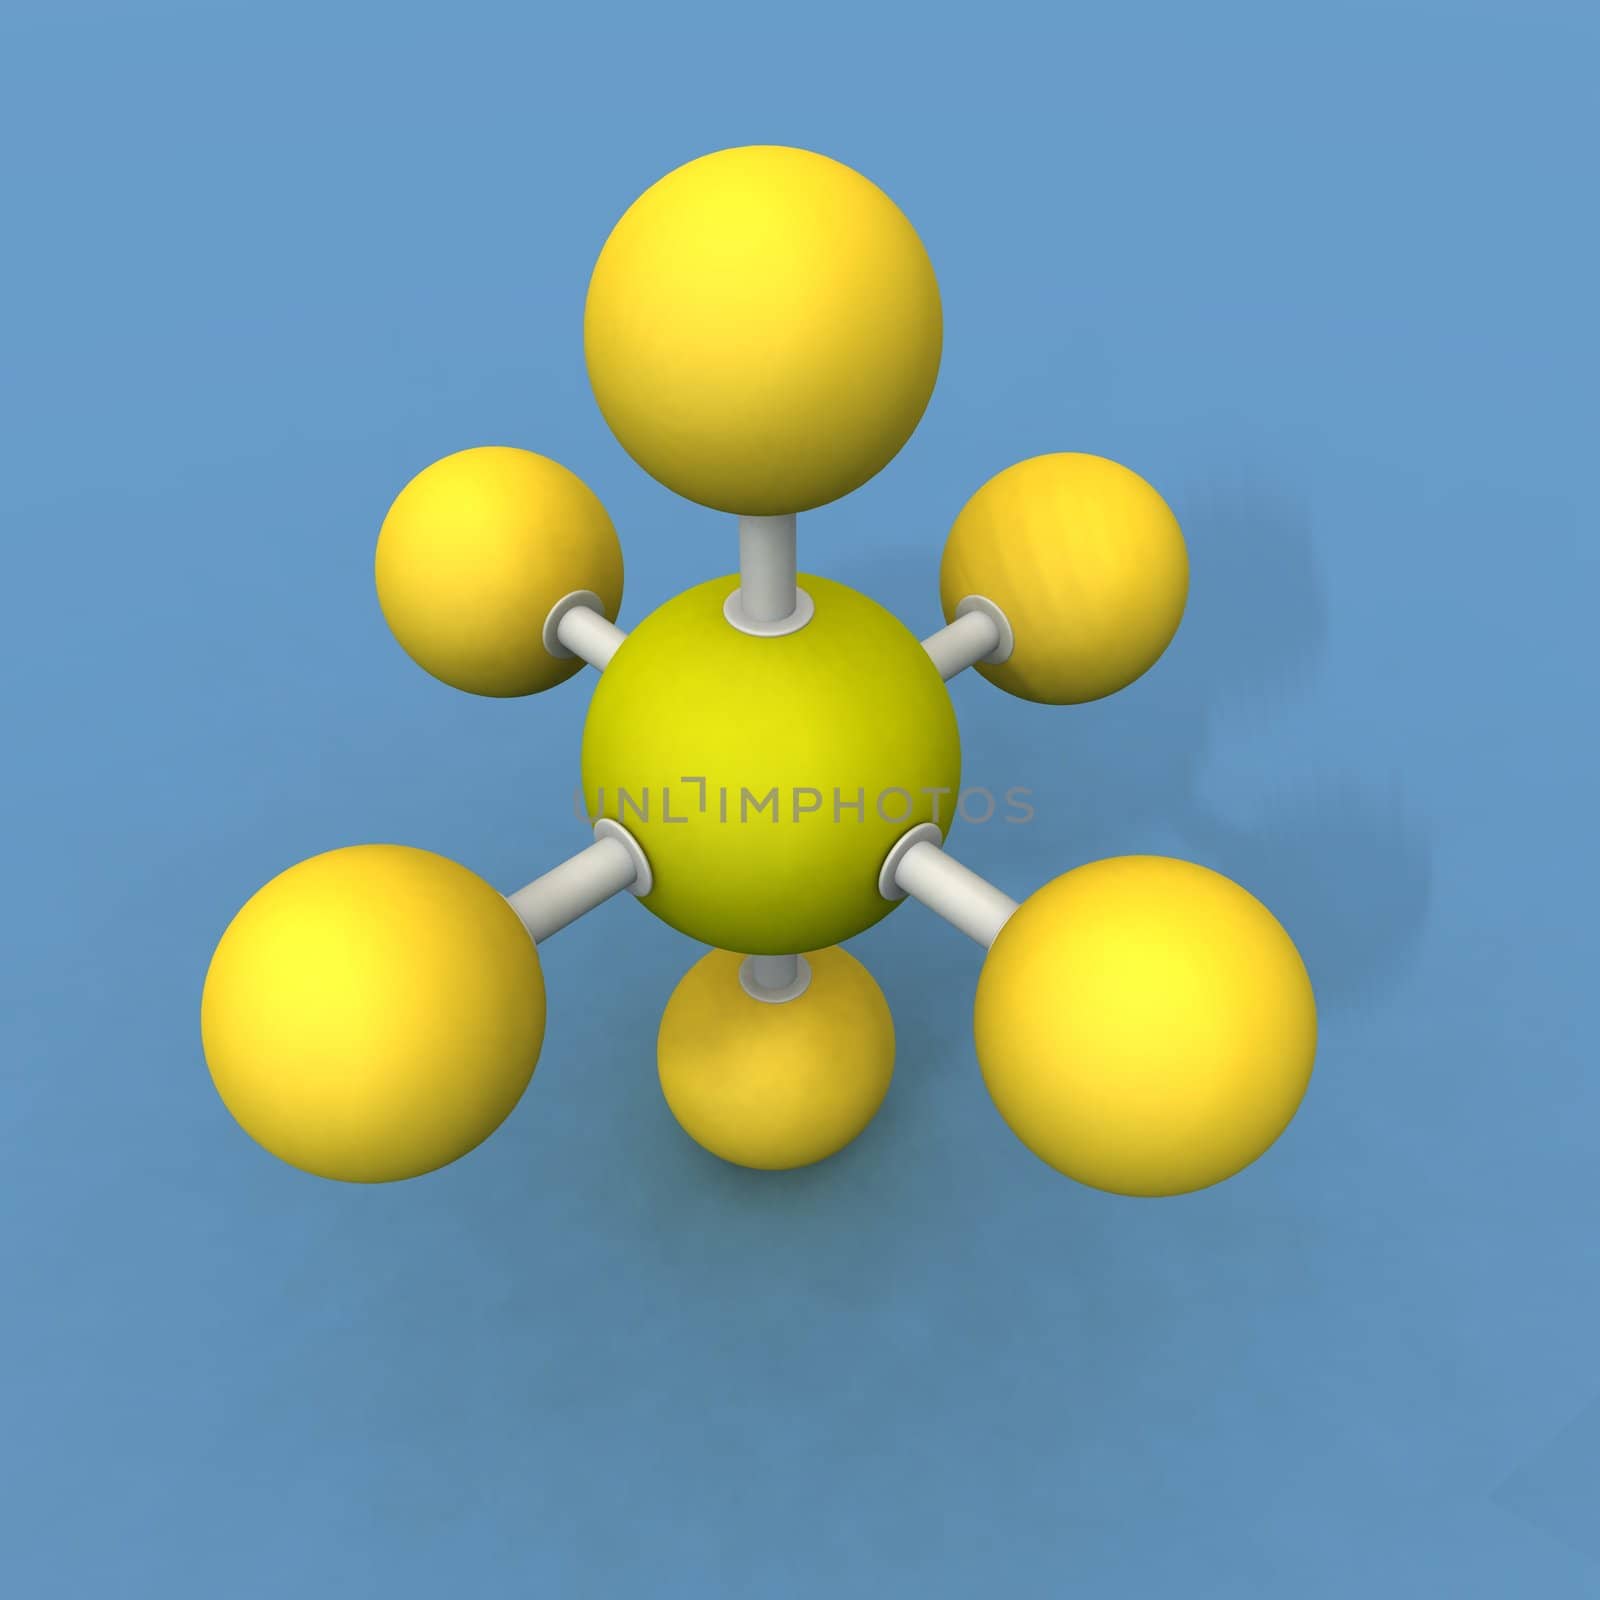 sulfur hexafluoride by jbouzou